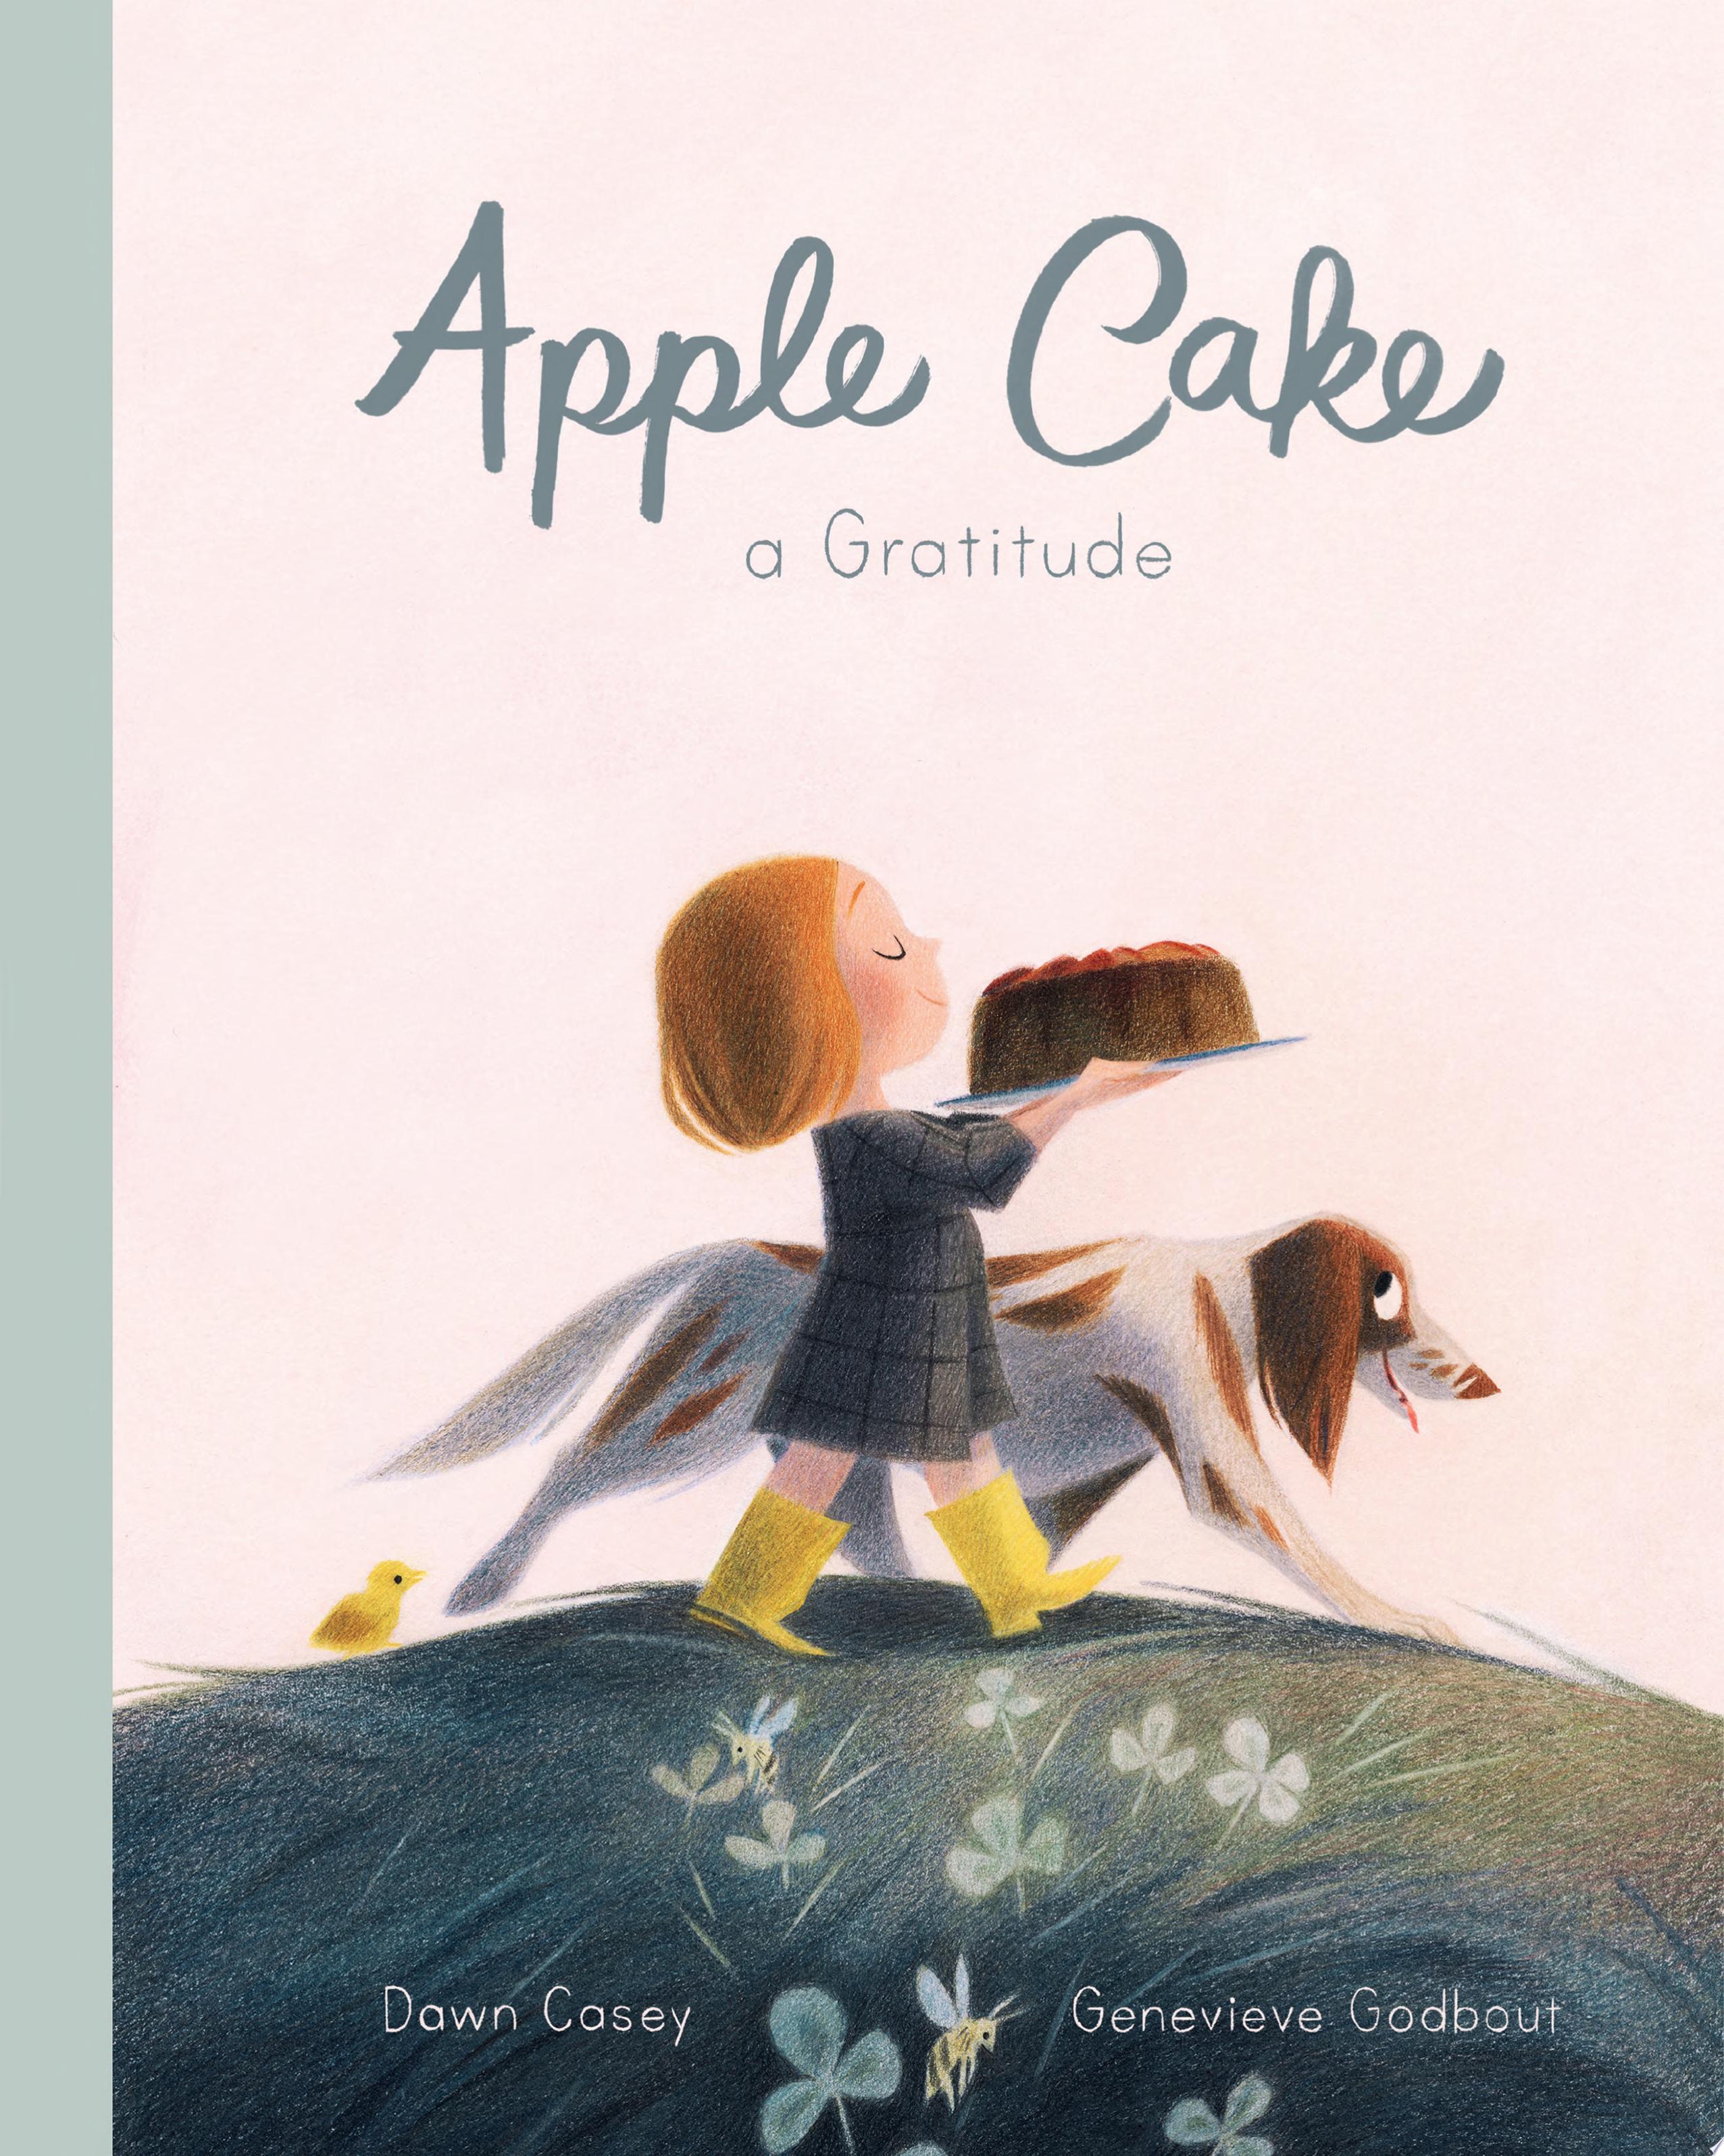 Image for "Apple Cake: A Gratitude"